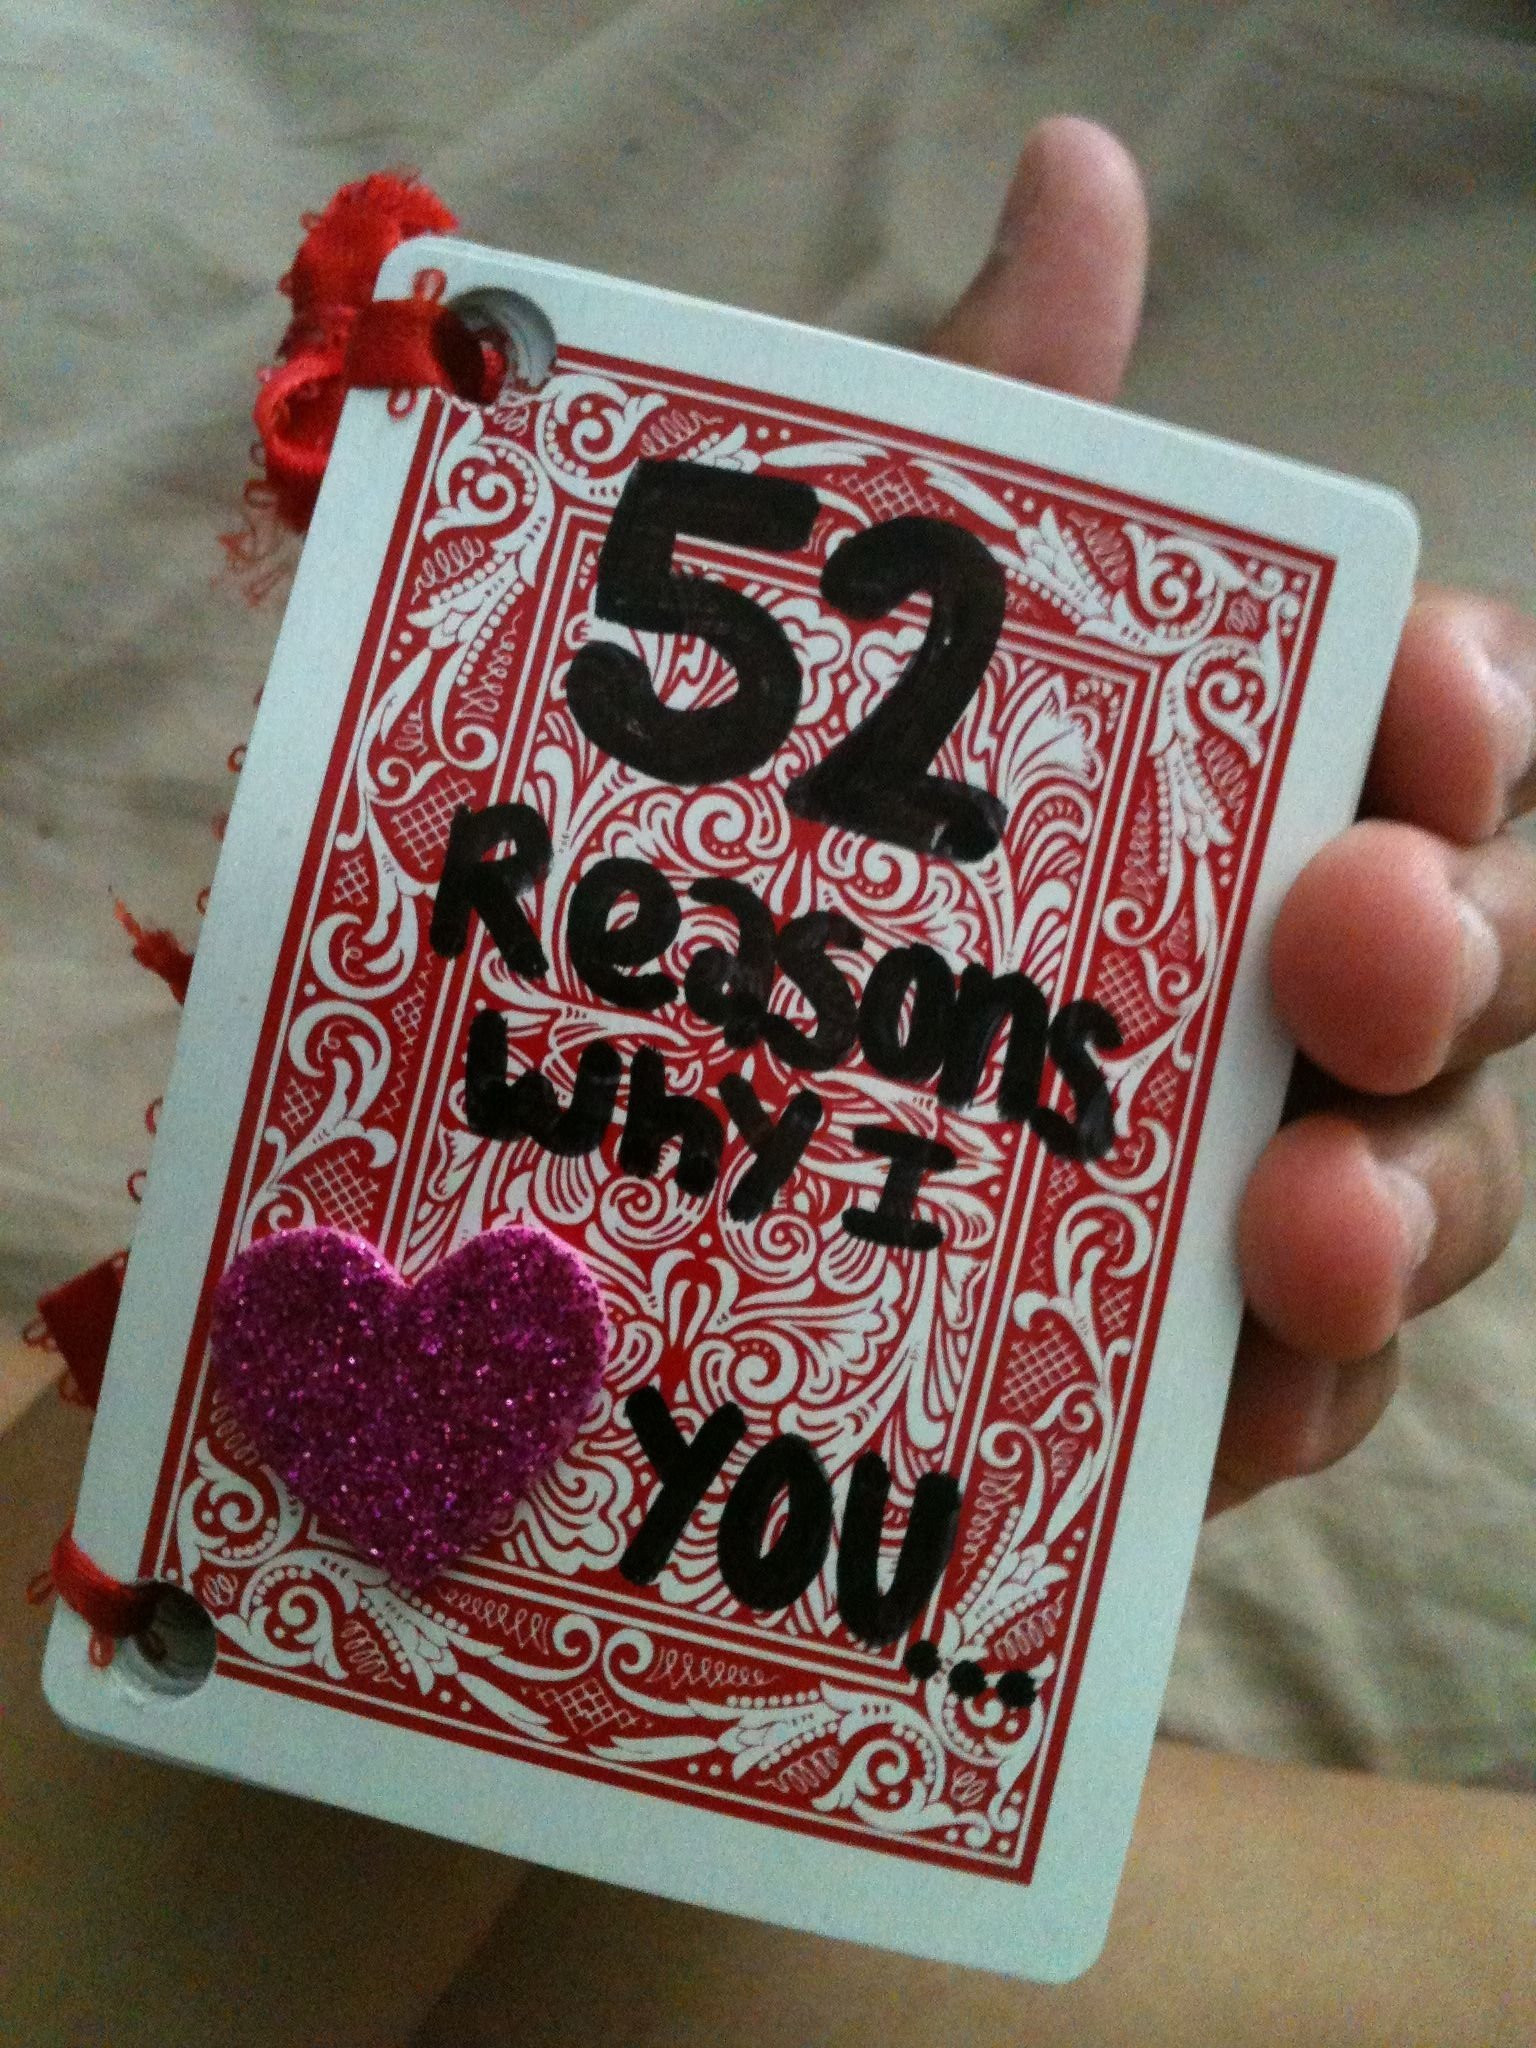 Cute Sentimental Gift Ideas For Boyfriend
 10 Lovable Romantic Birthday Gift Ideas Boyfriend 2020